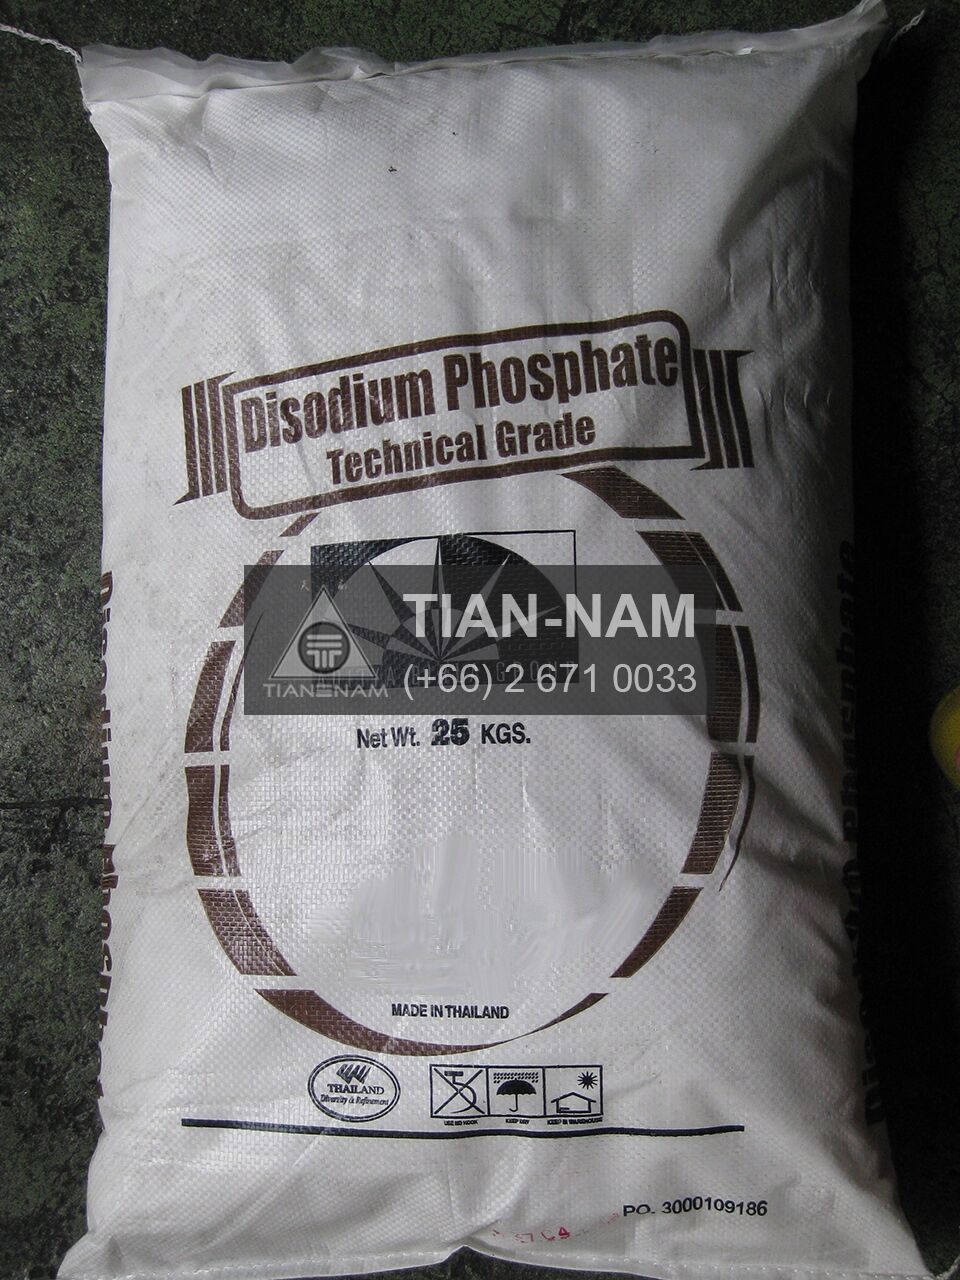 Di Sodium Phosphate DSP Thailand ได โซเดียม ฟอสเฟต ดีเอสพี ไทย